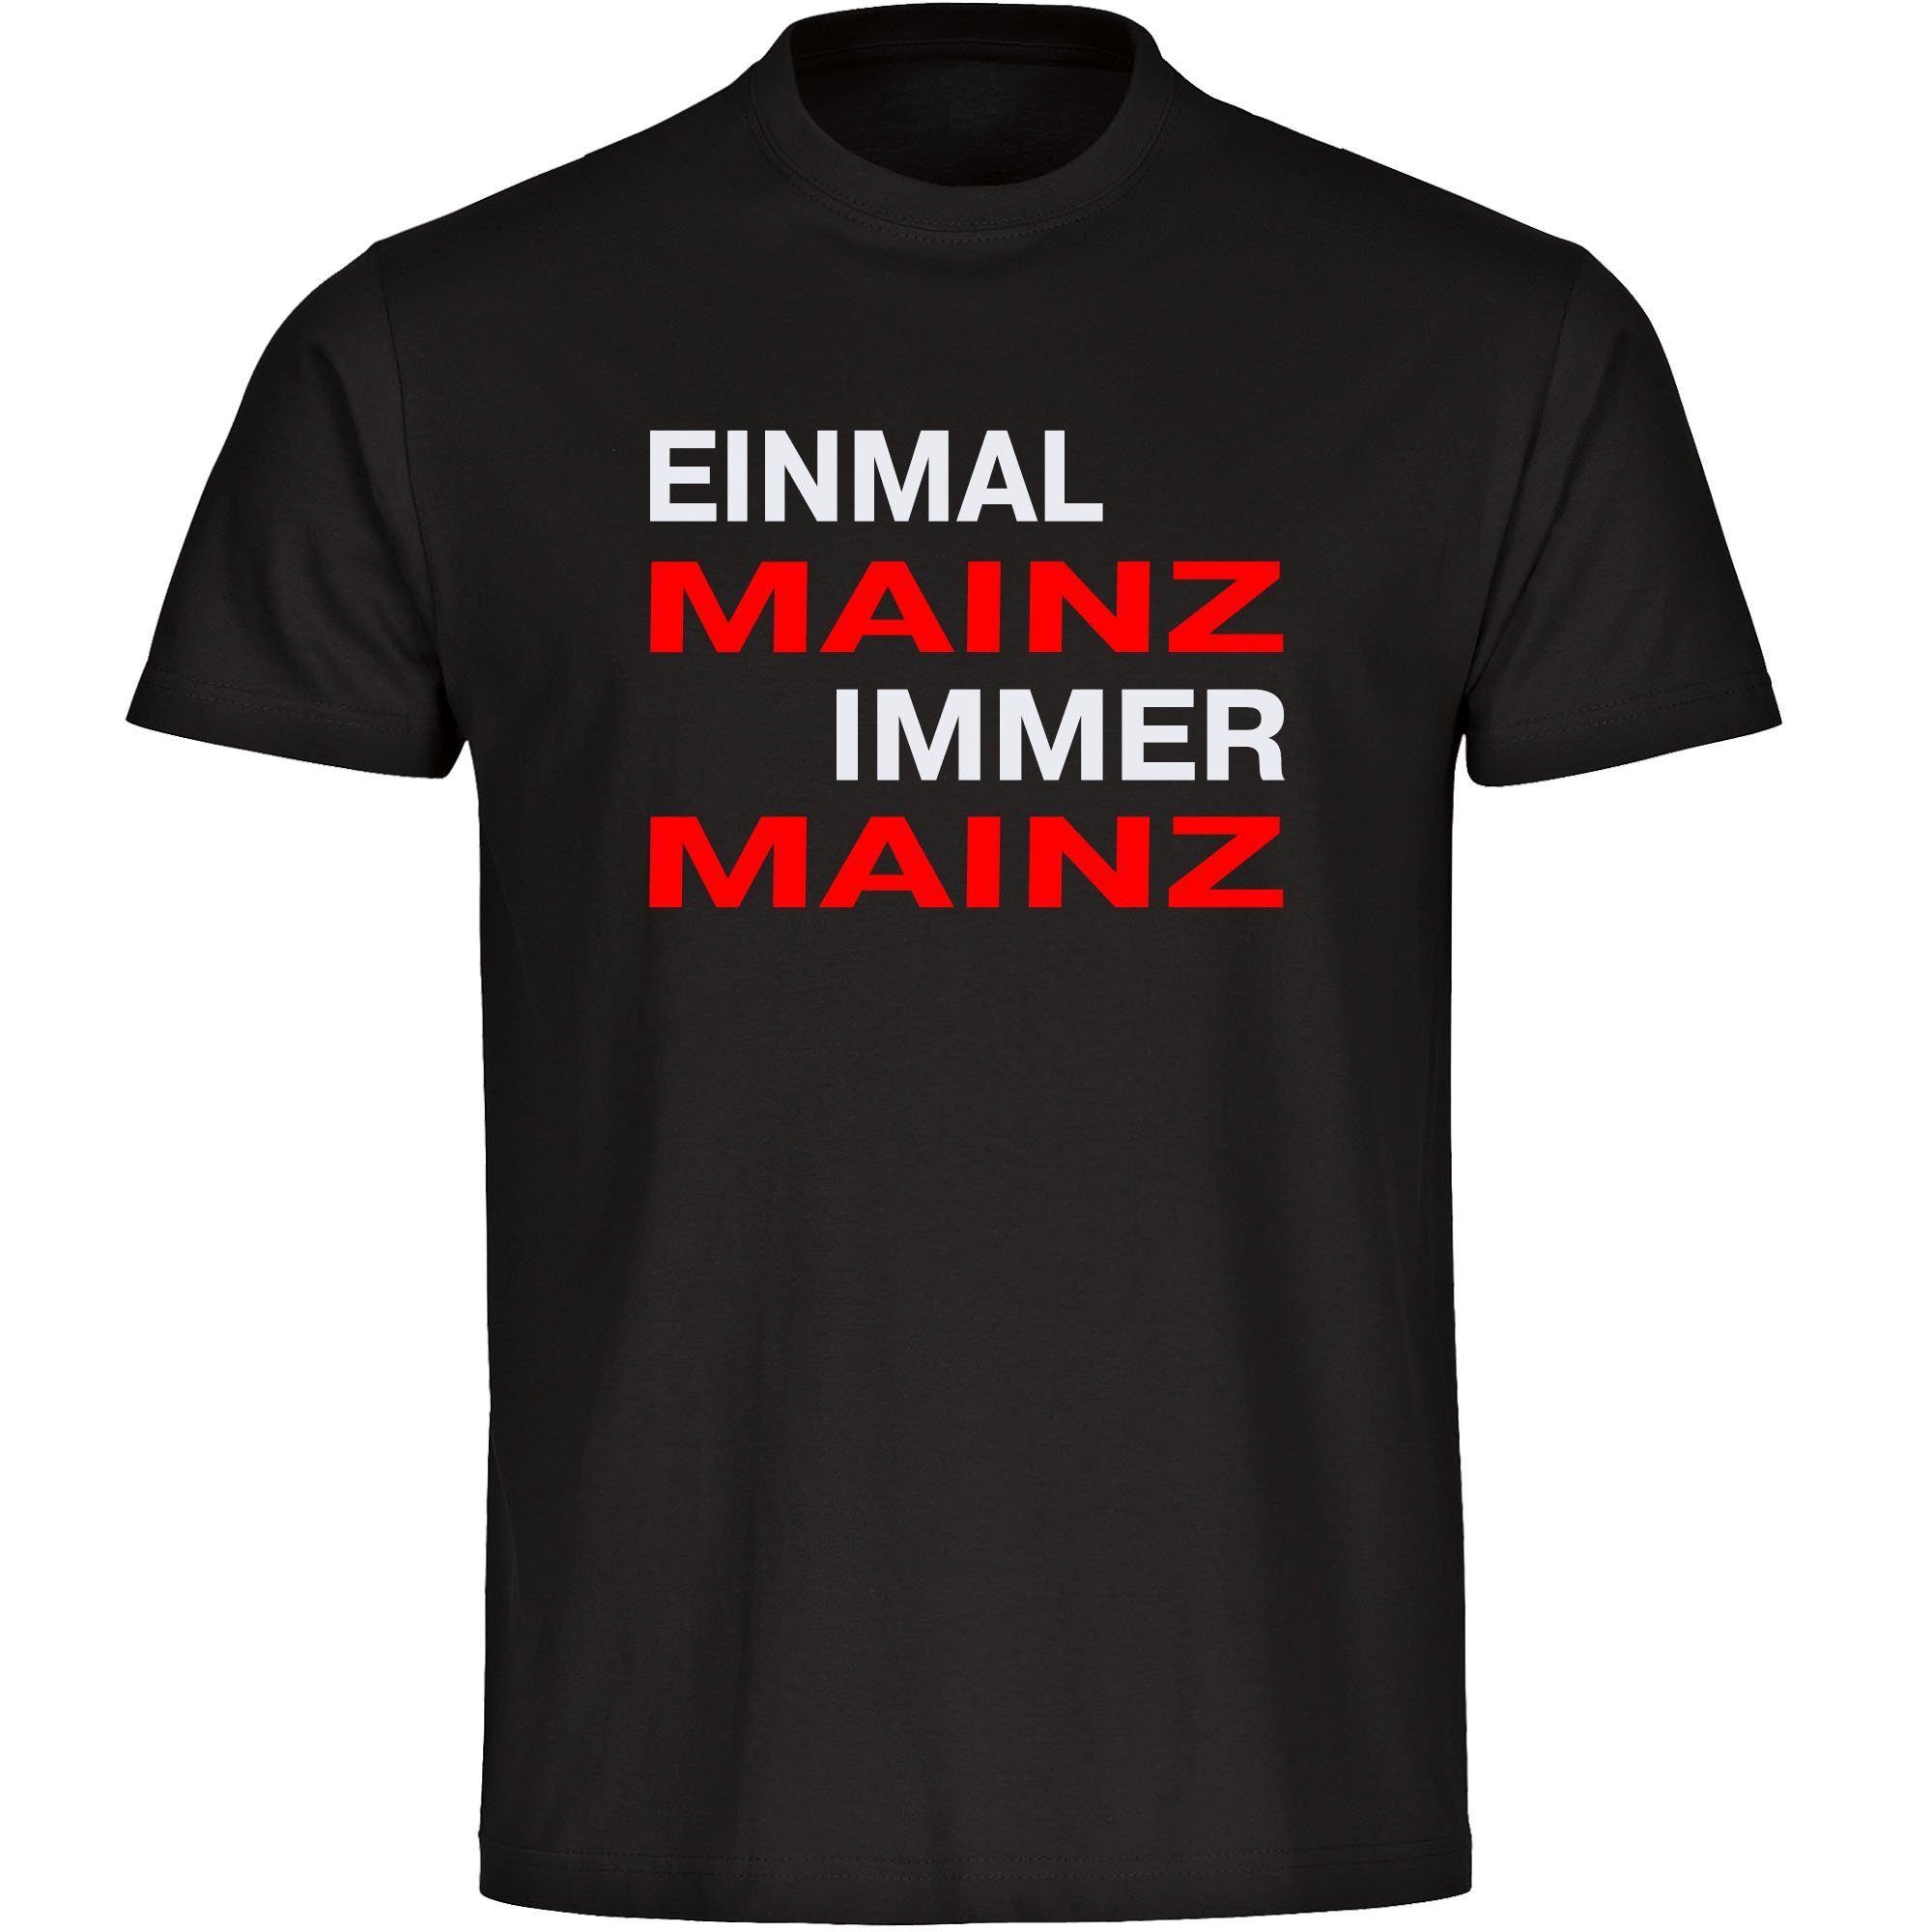 multifanshop T-Shirt Herren Mainz - Einmal Immer - Männer